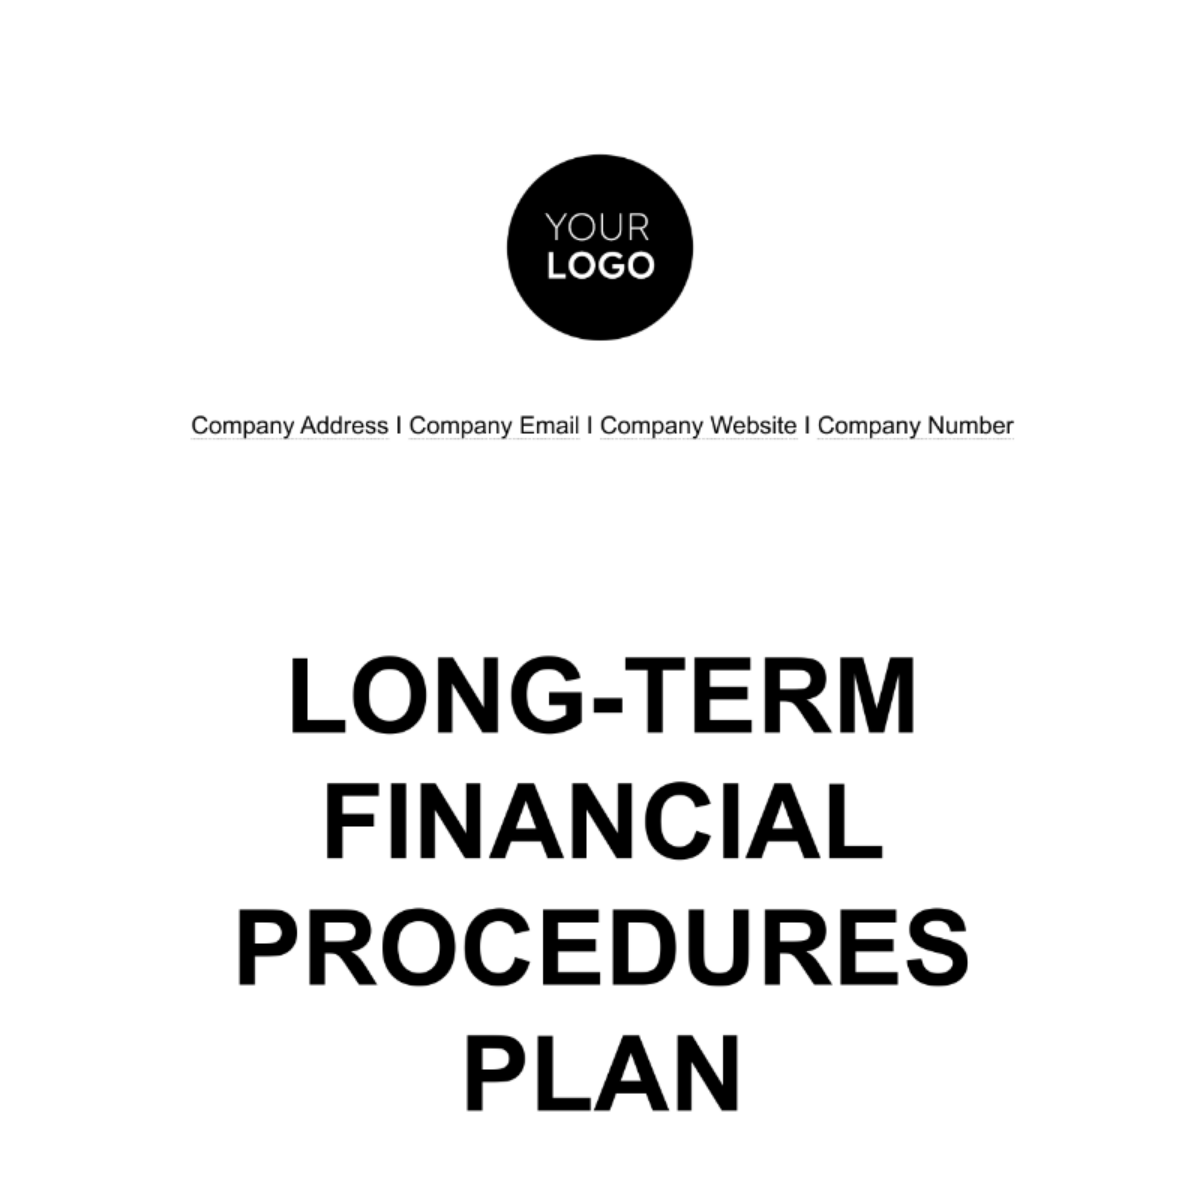 Free Long-Term Financial Procedures Plan Template